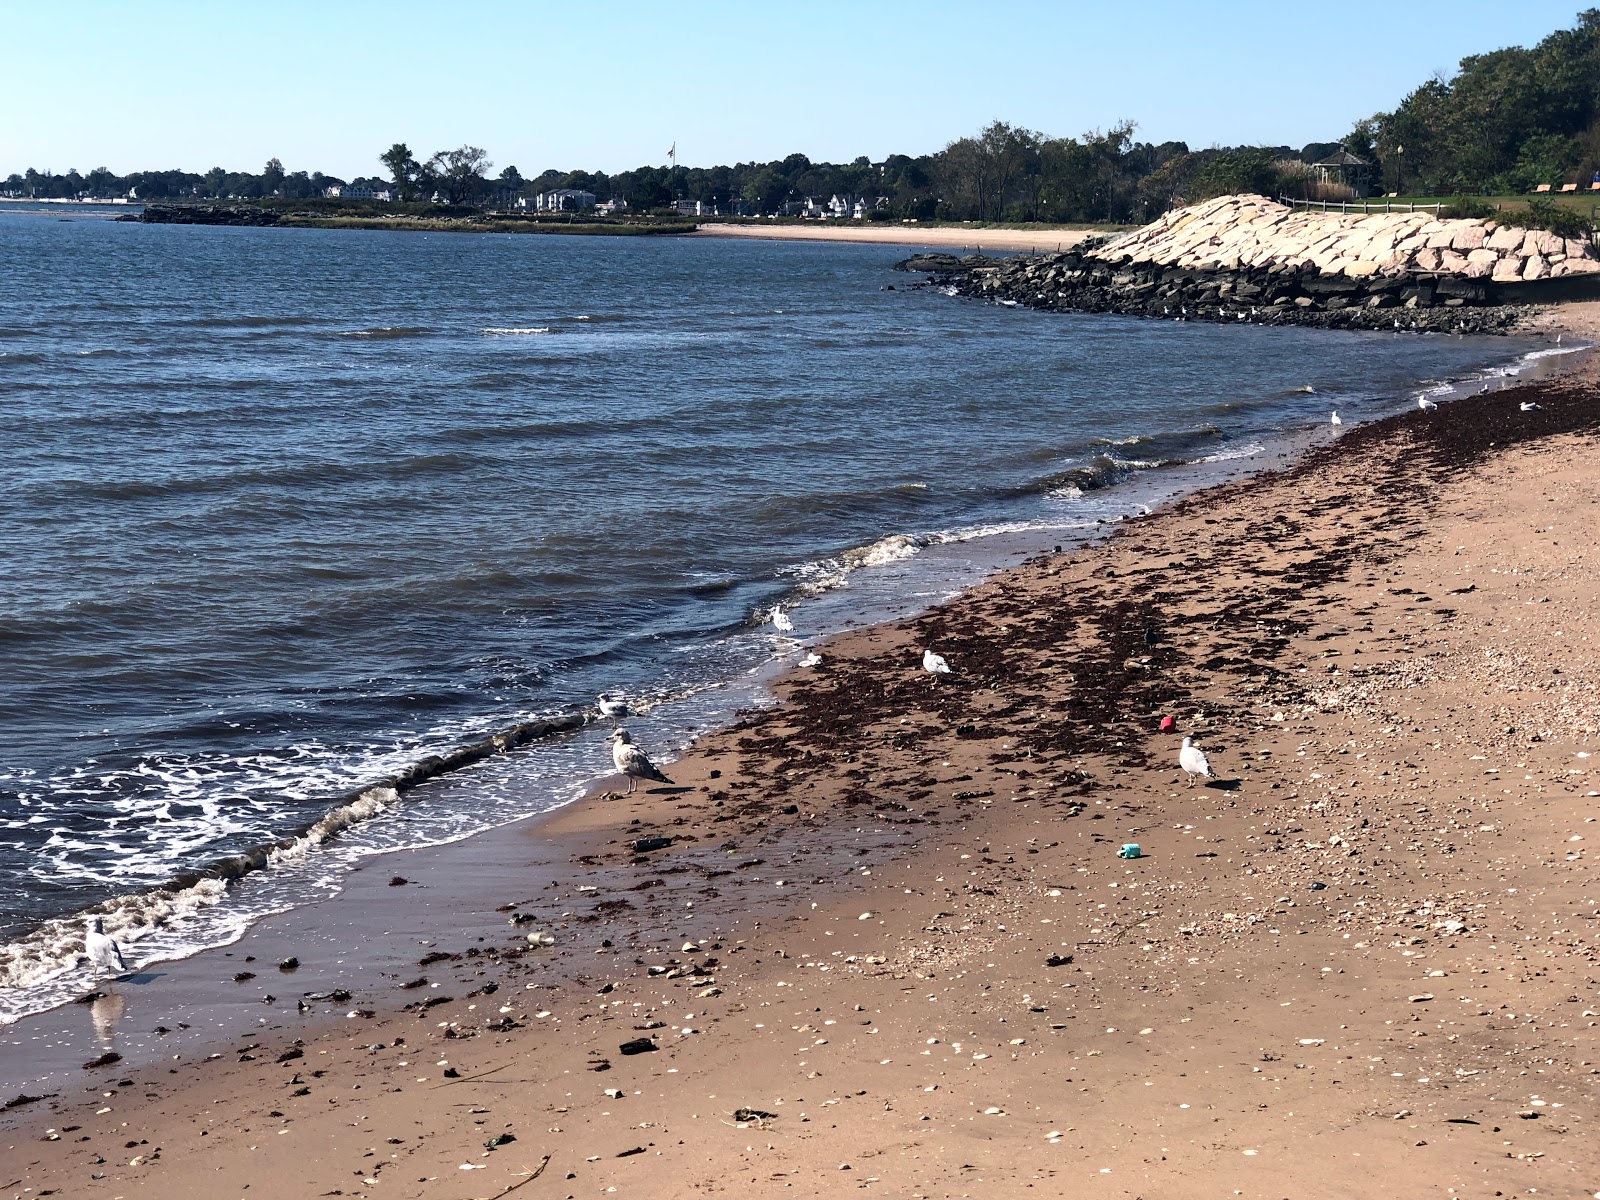 Foto de West Haven beach - lugar popular entre os apreciadores de relaxamento